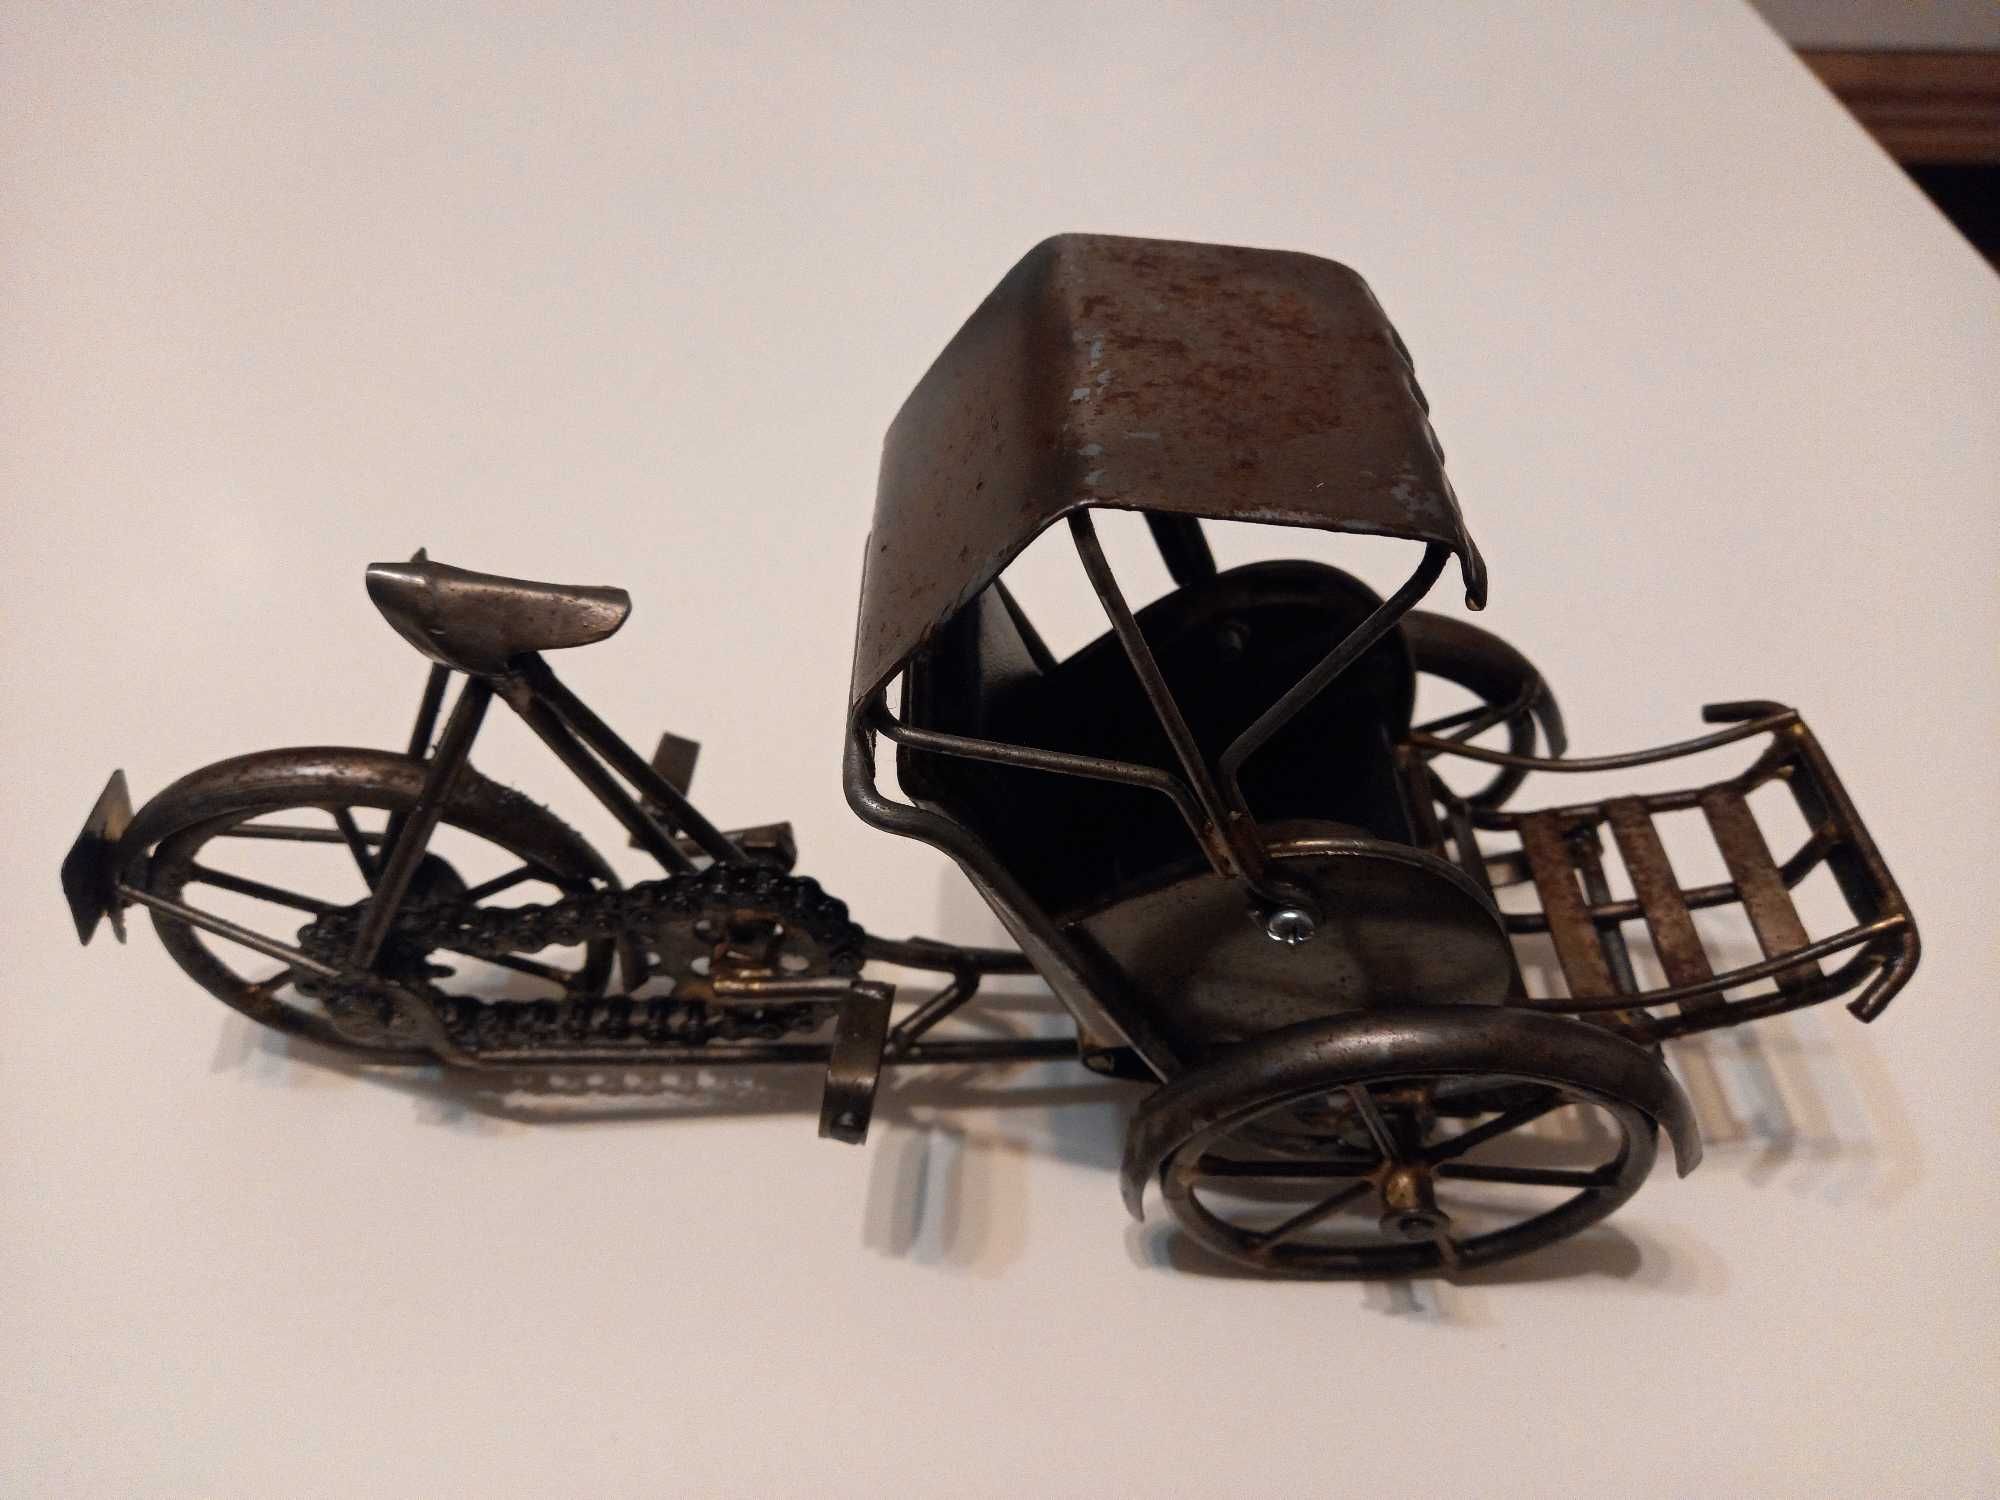 Винтидж метална кола и автентичен метален макет на рикша, за декорация